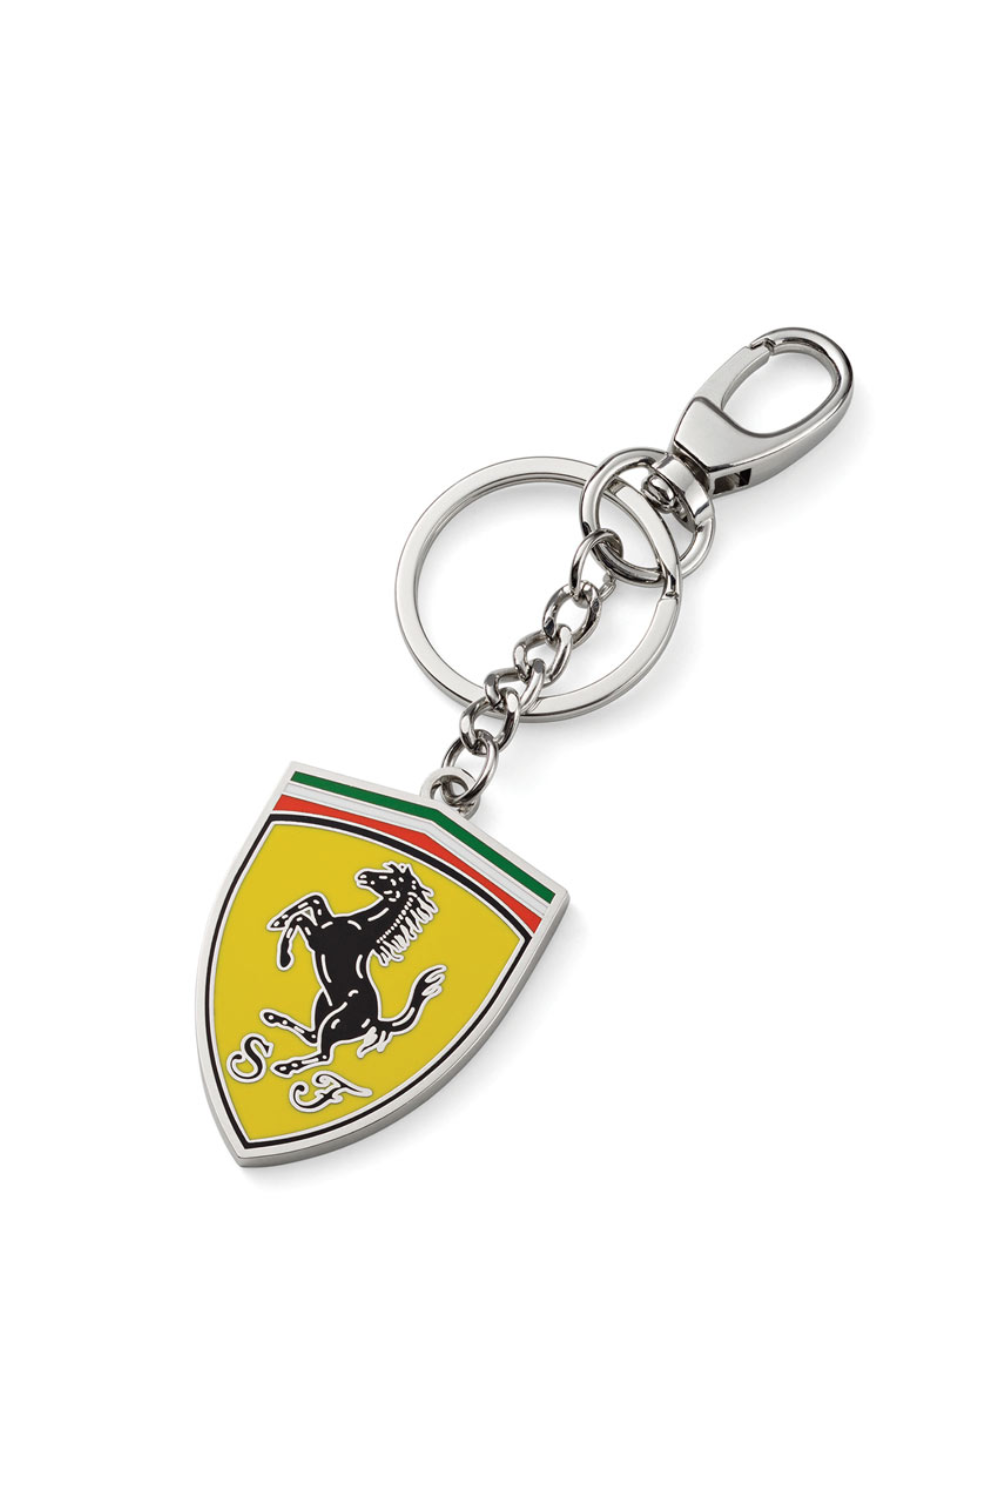 F1, Ferrari Scuderia 2023